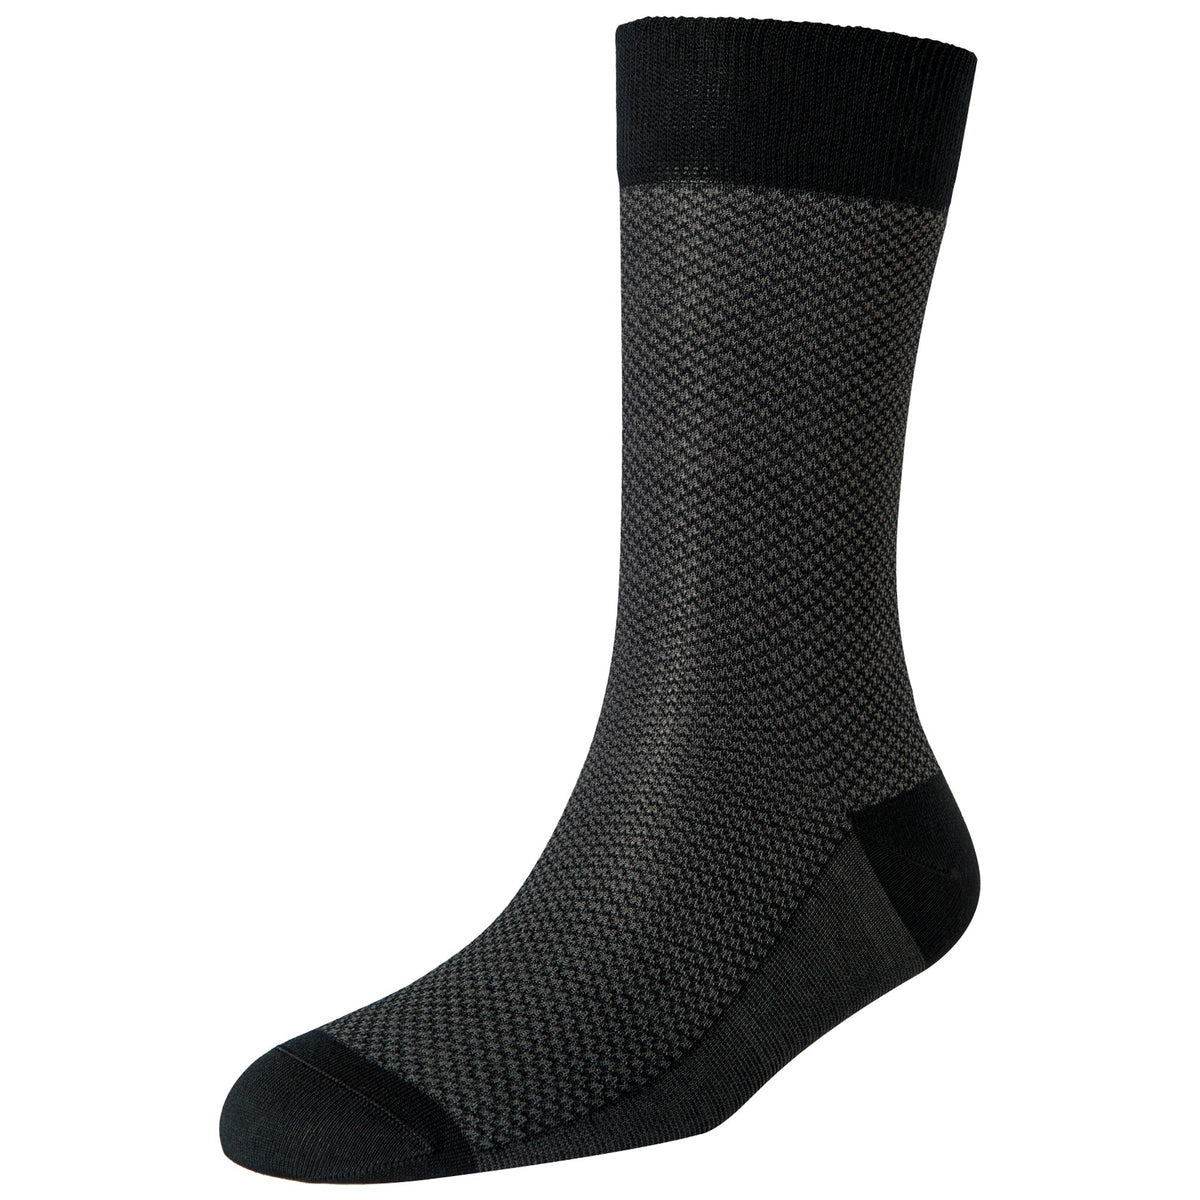 Men's Merino Wool Fashion Standard Length Socks